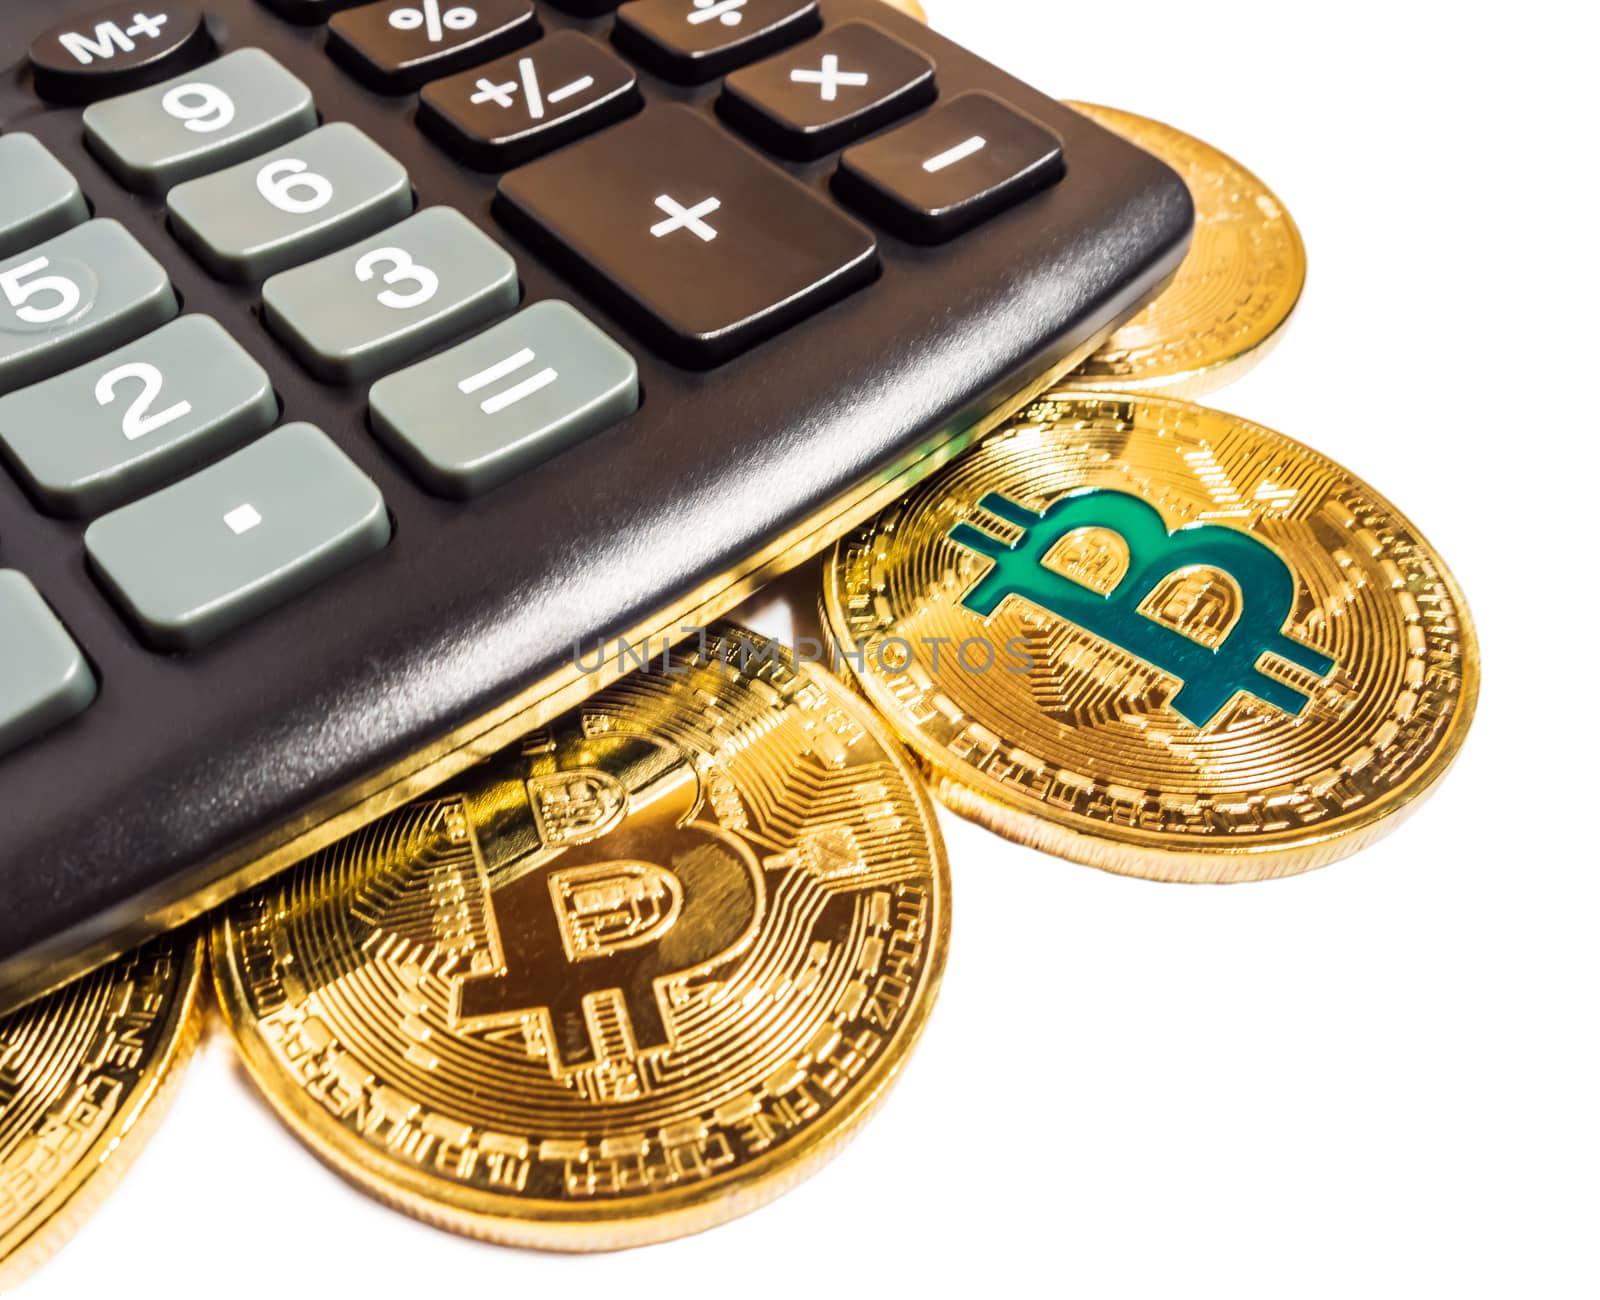 Gold bitcoin coin Business concept Black electronic calculator by Vladyslav